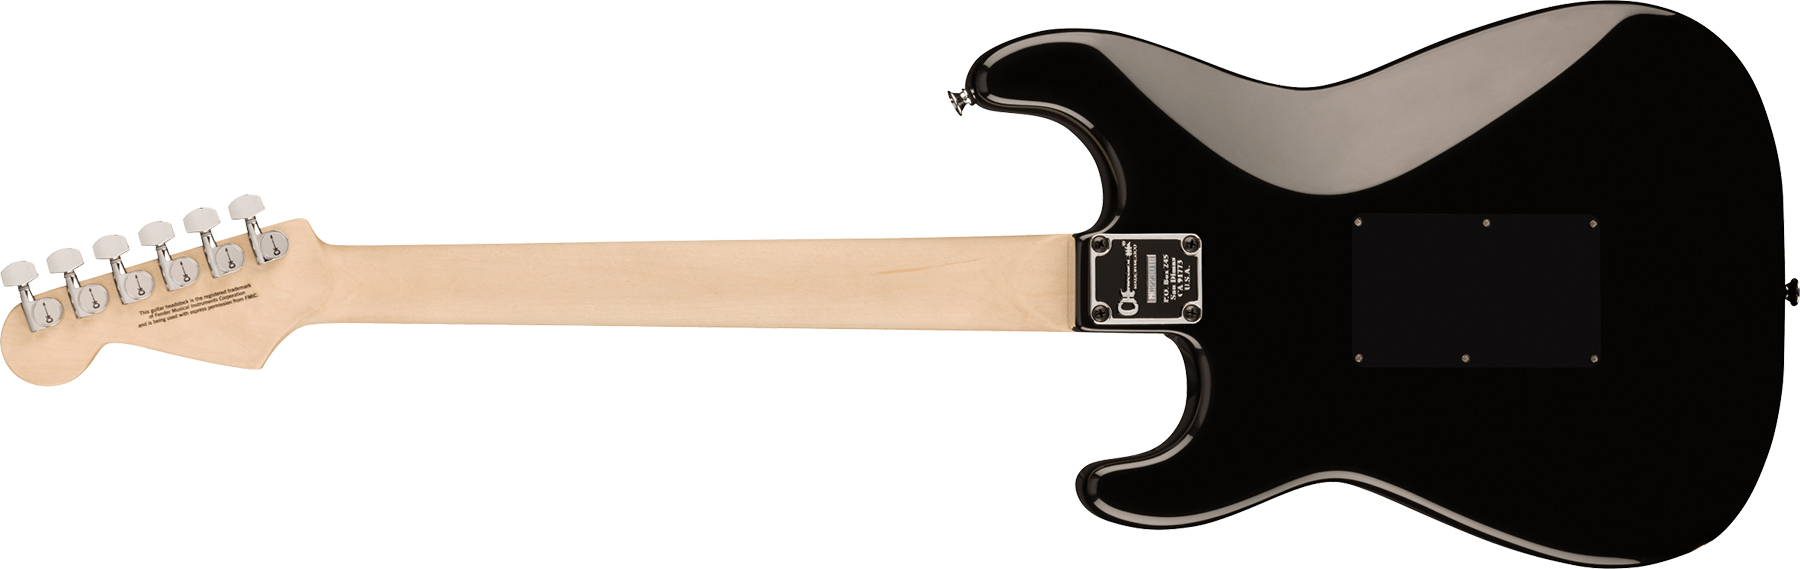 Charvel Pro-mod So-cal Style 1 Hh Fr M 2h Seymour Duncan Mn - Gloss Black - Guitarra eléctrica con forma de str. - Variation 1